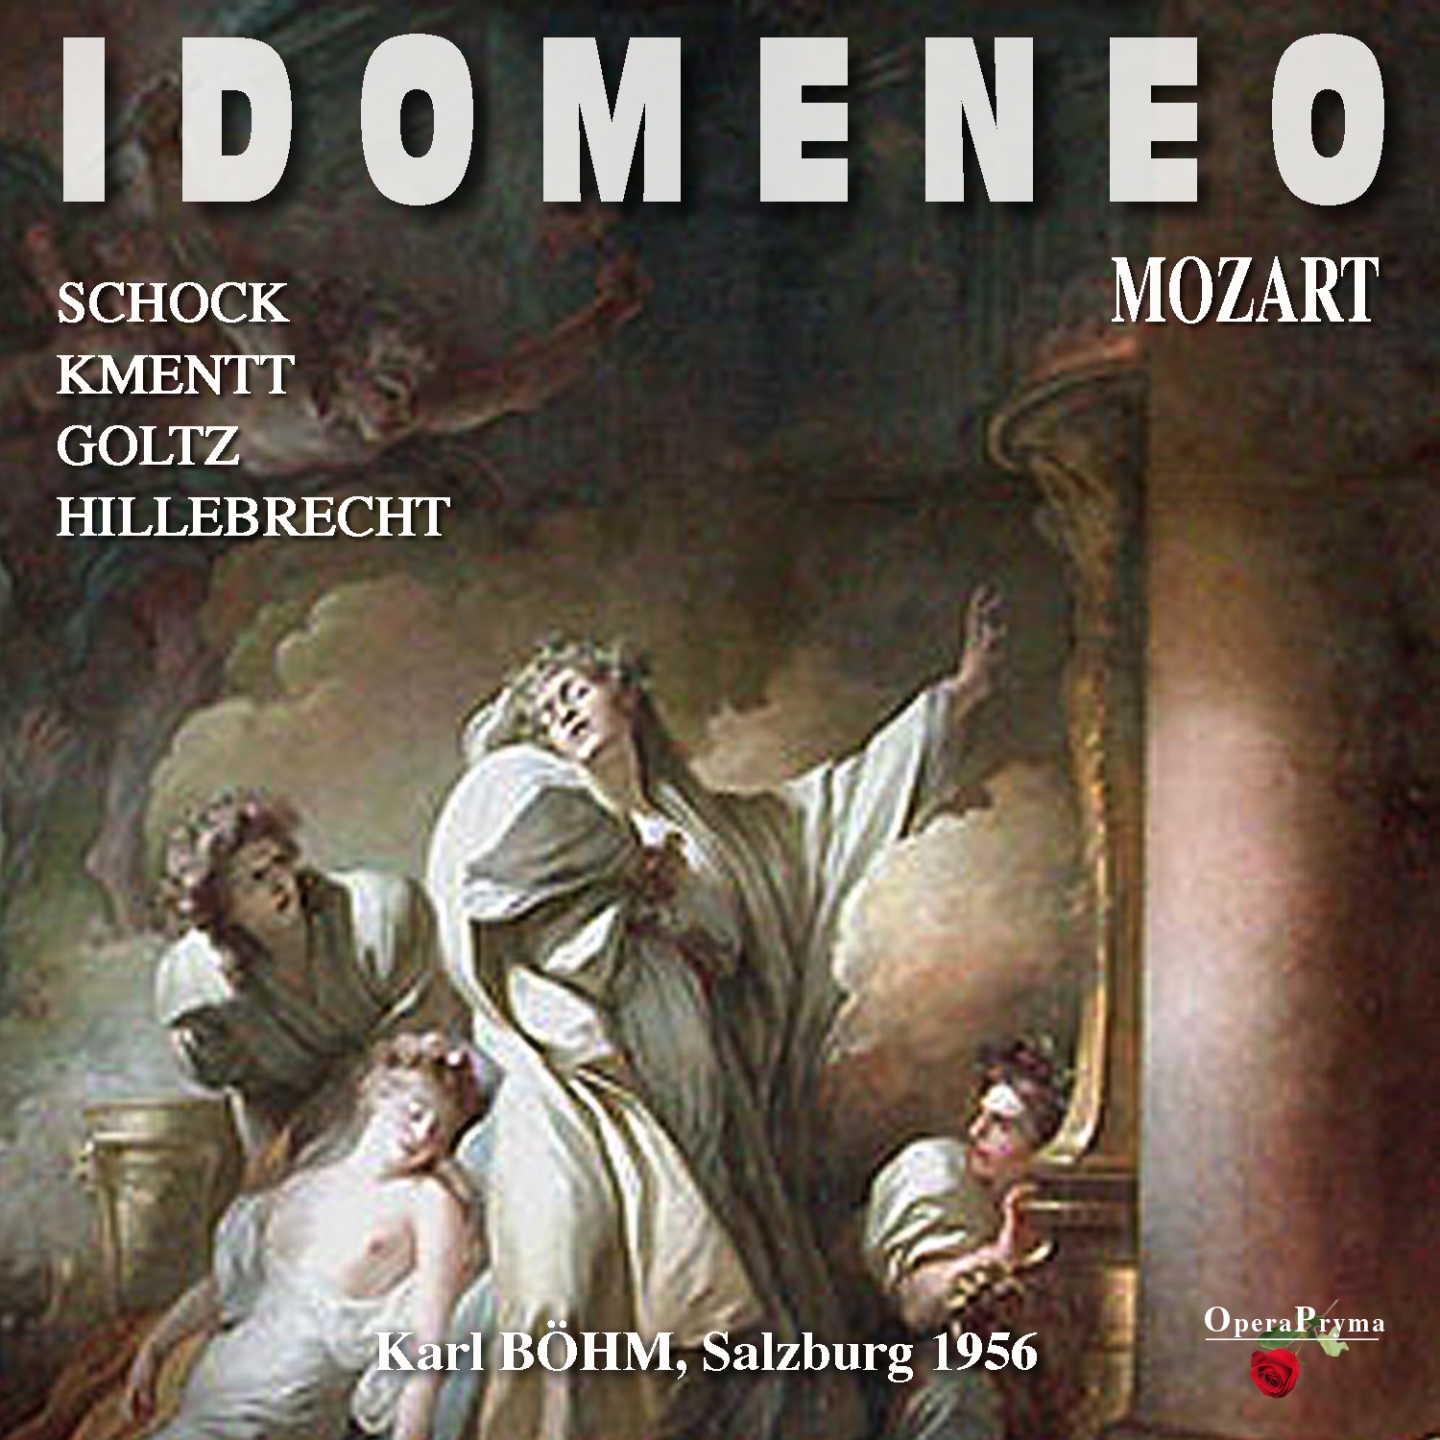 Idomeneo, K. 366, Act I: "Overture"